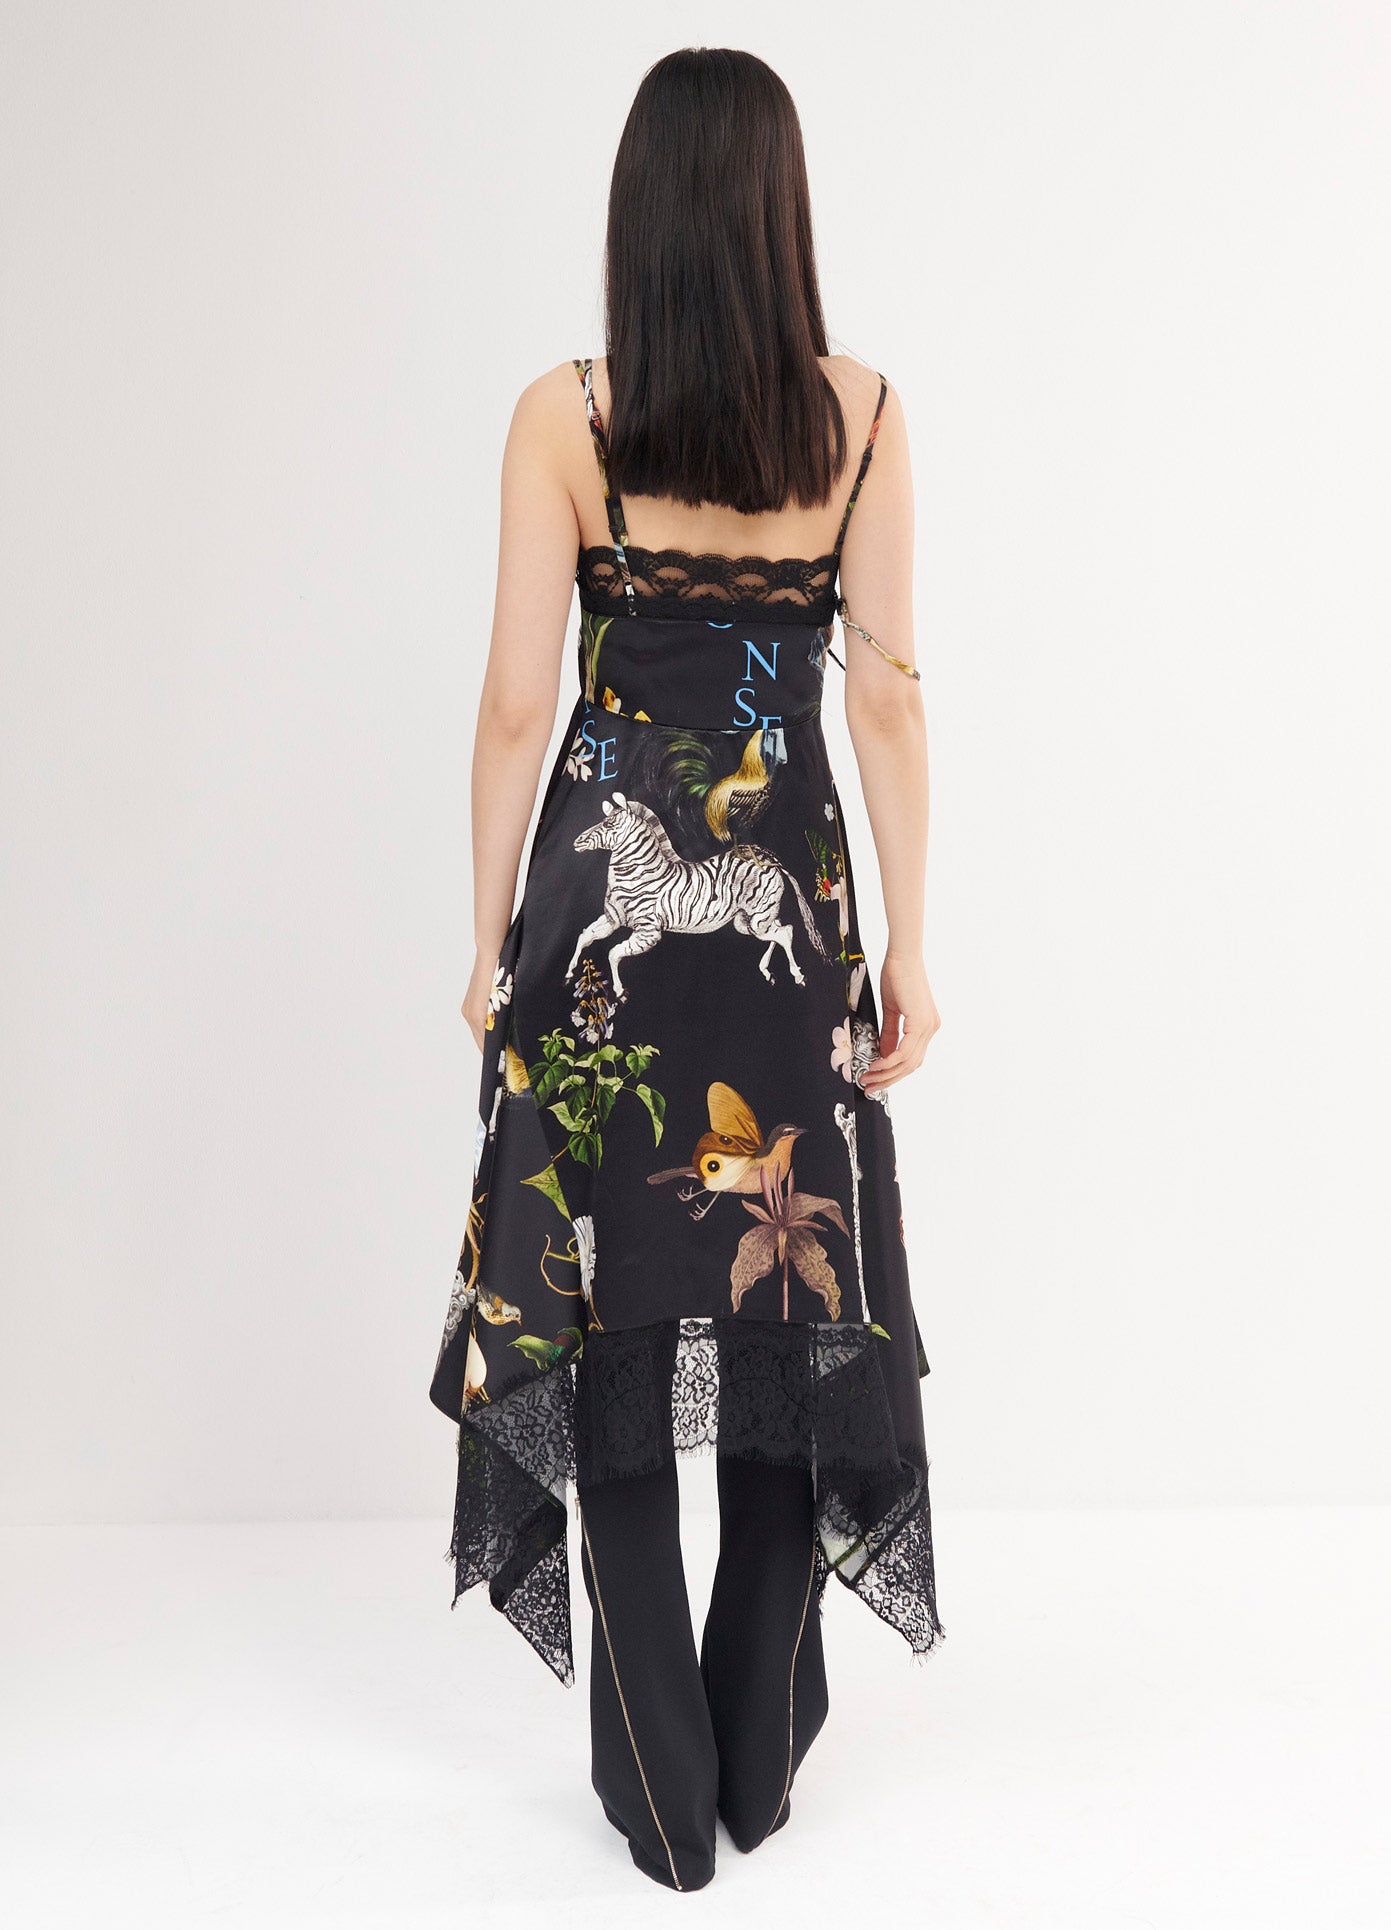 MONSE Print Lace Slip Dress in Black Multi on Model Full Back View